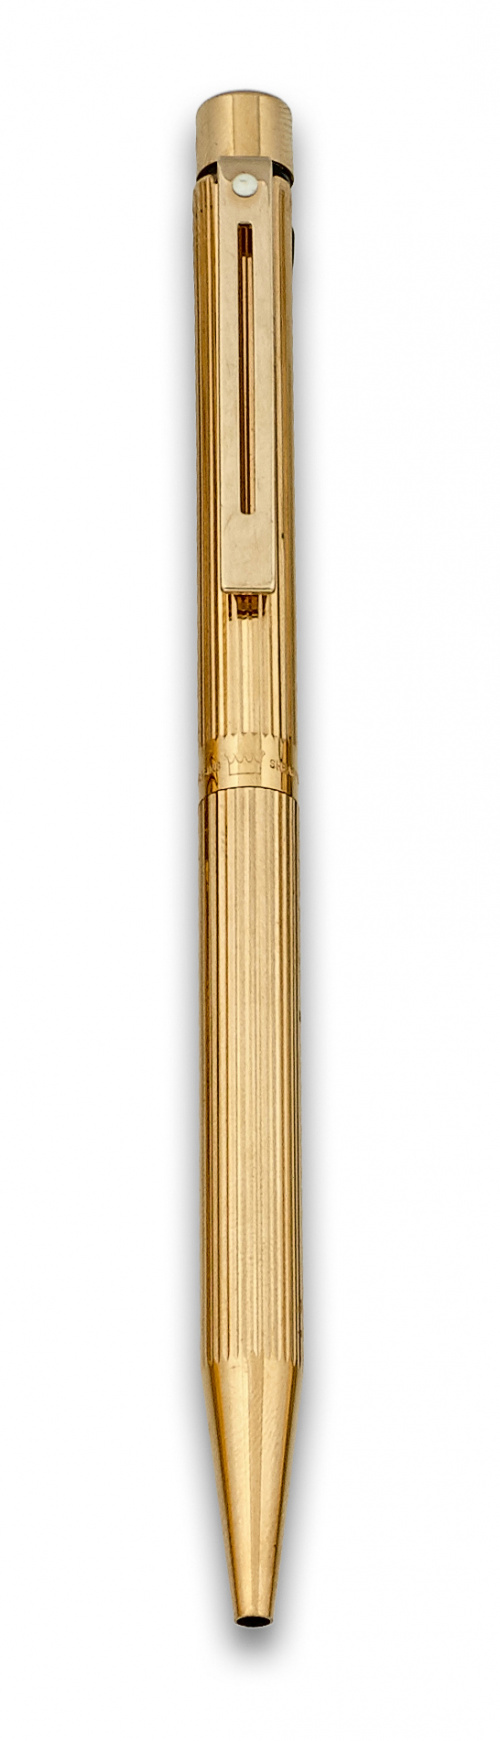 Bolígrafo SHEAFFER modelo Targa laminado en oro.